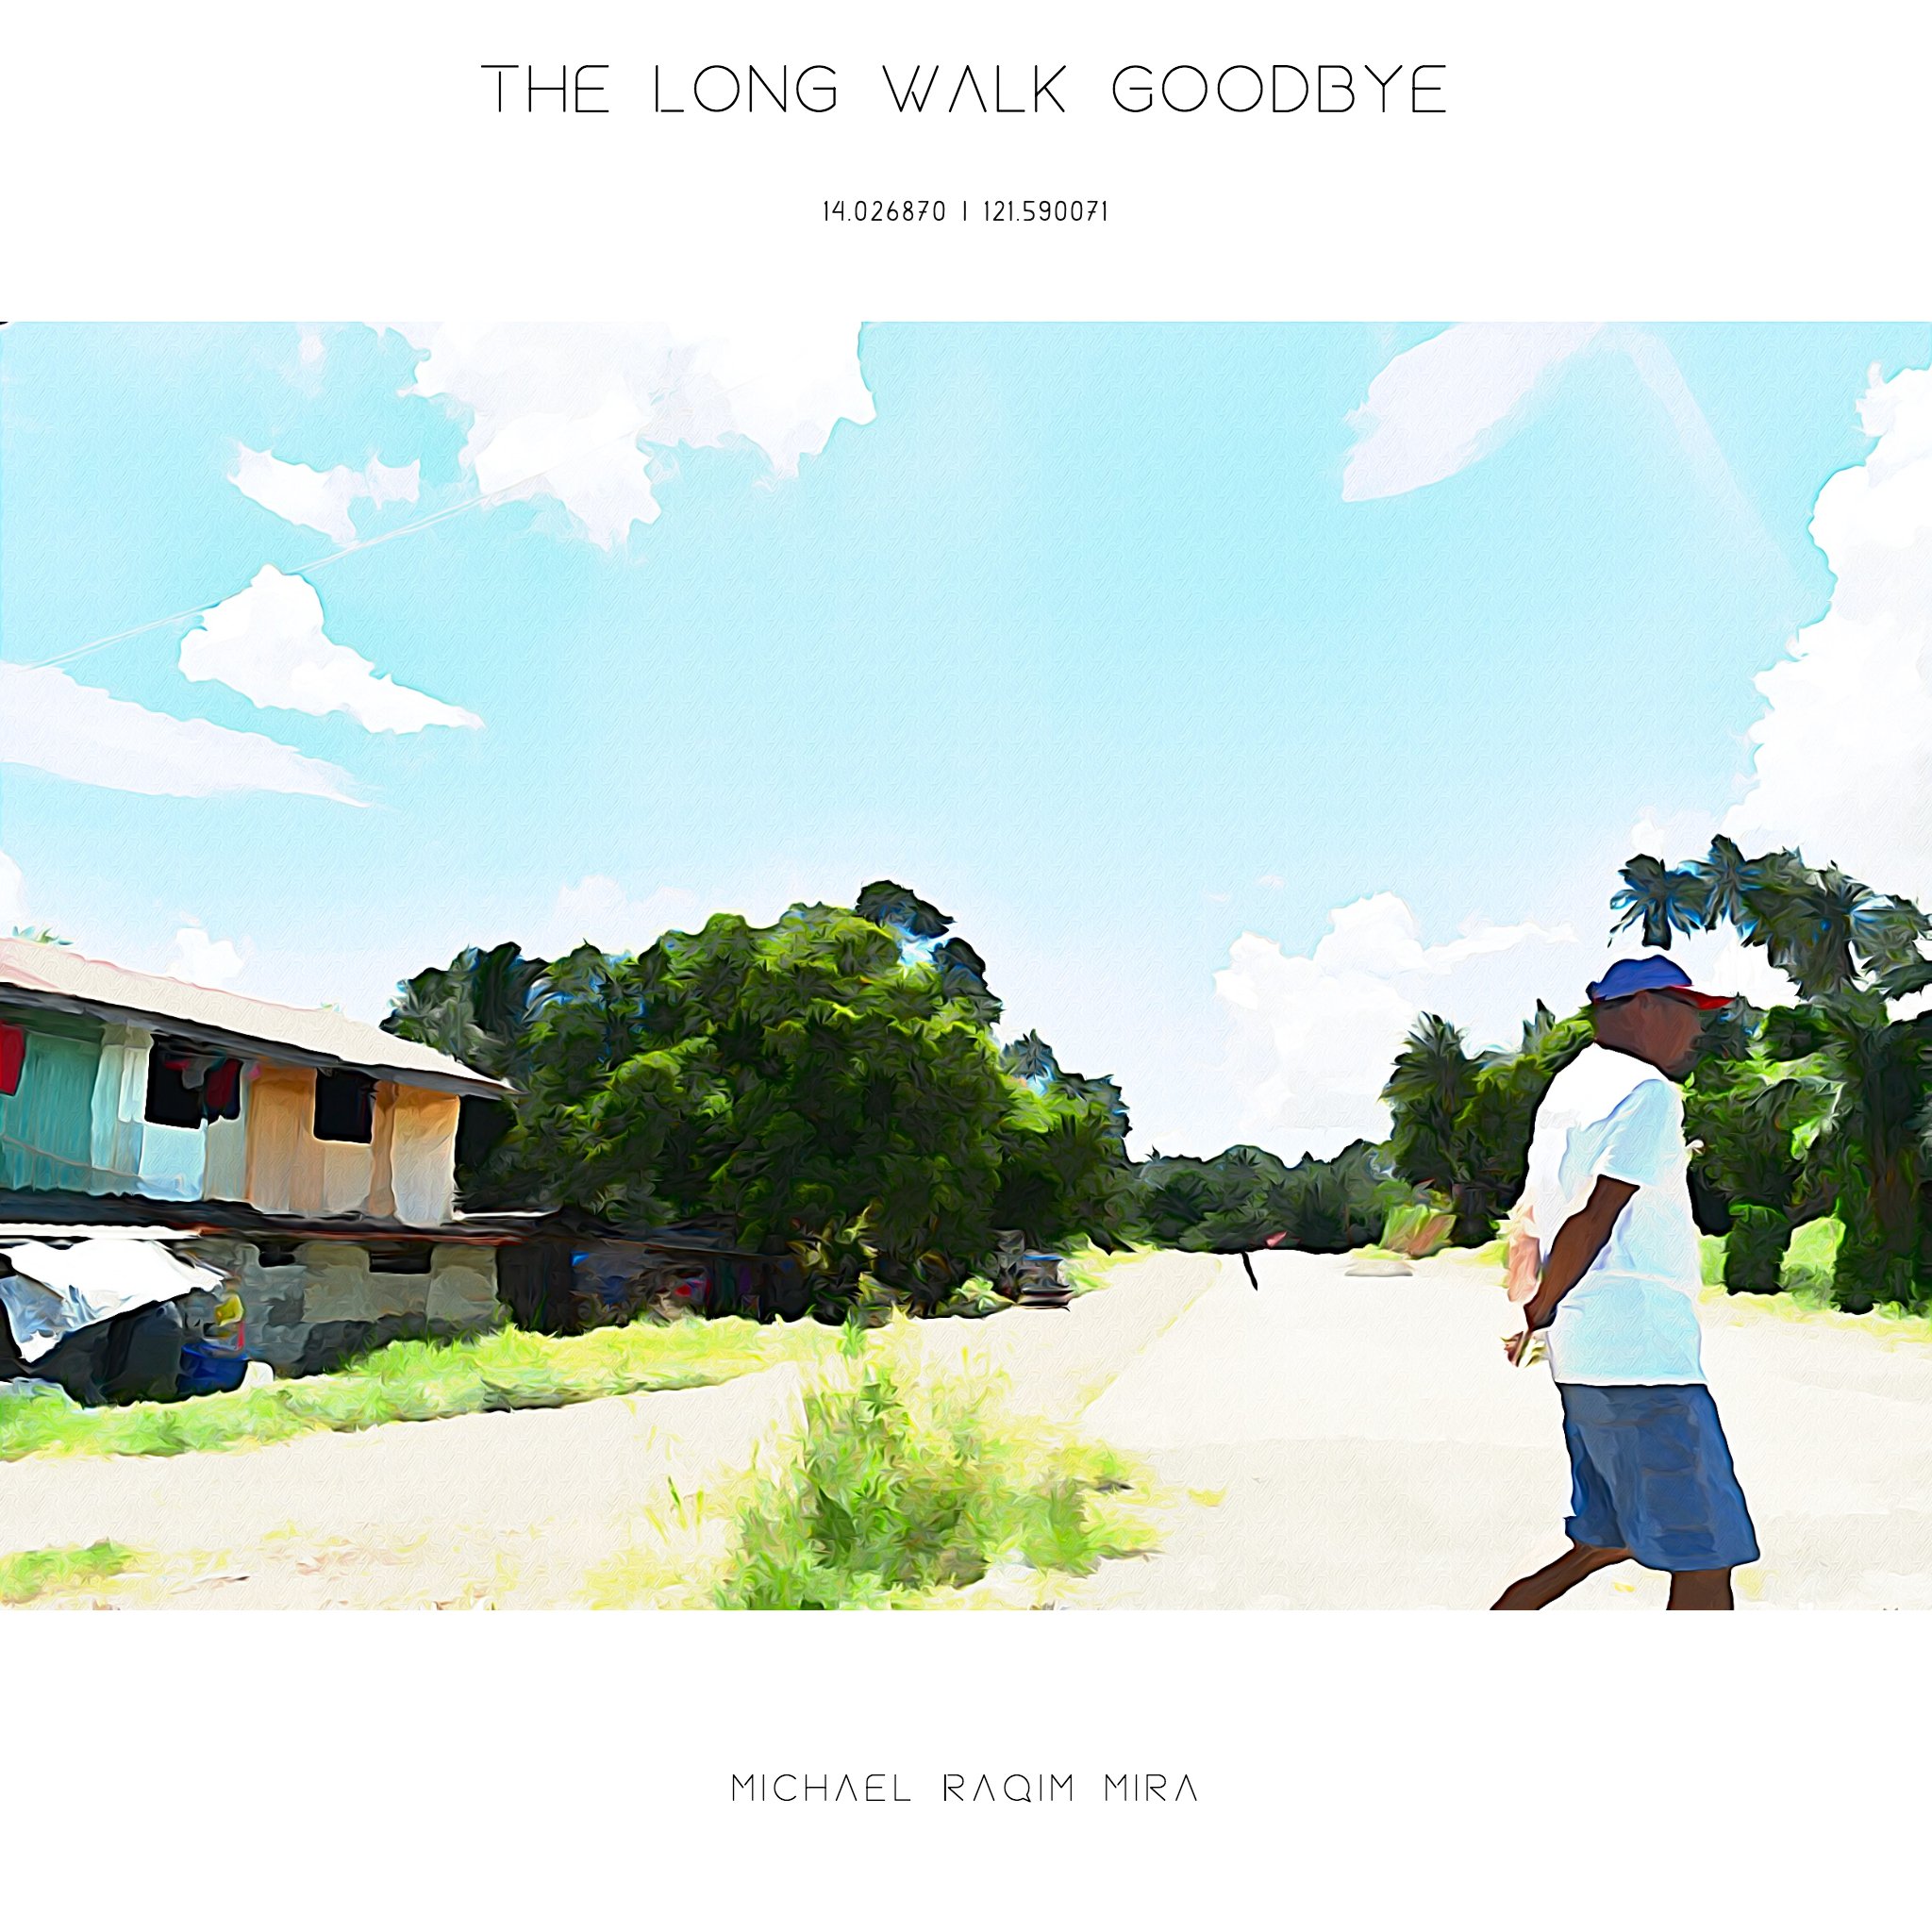 The Long Walk Goodbye by Michael Raqim Mira.jpg